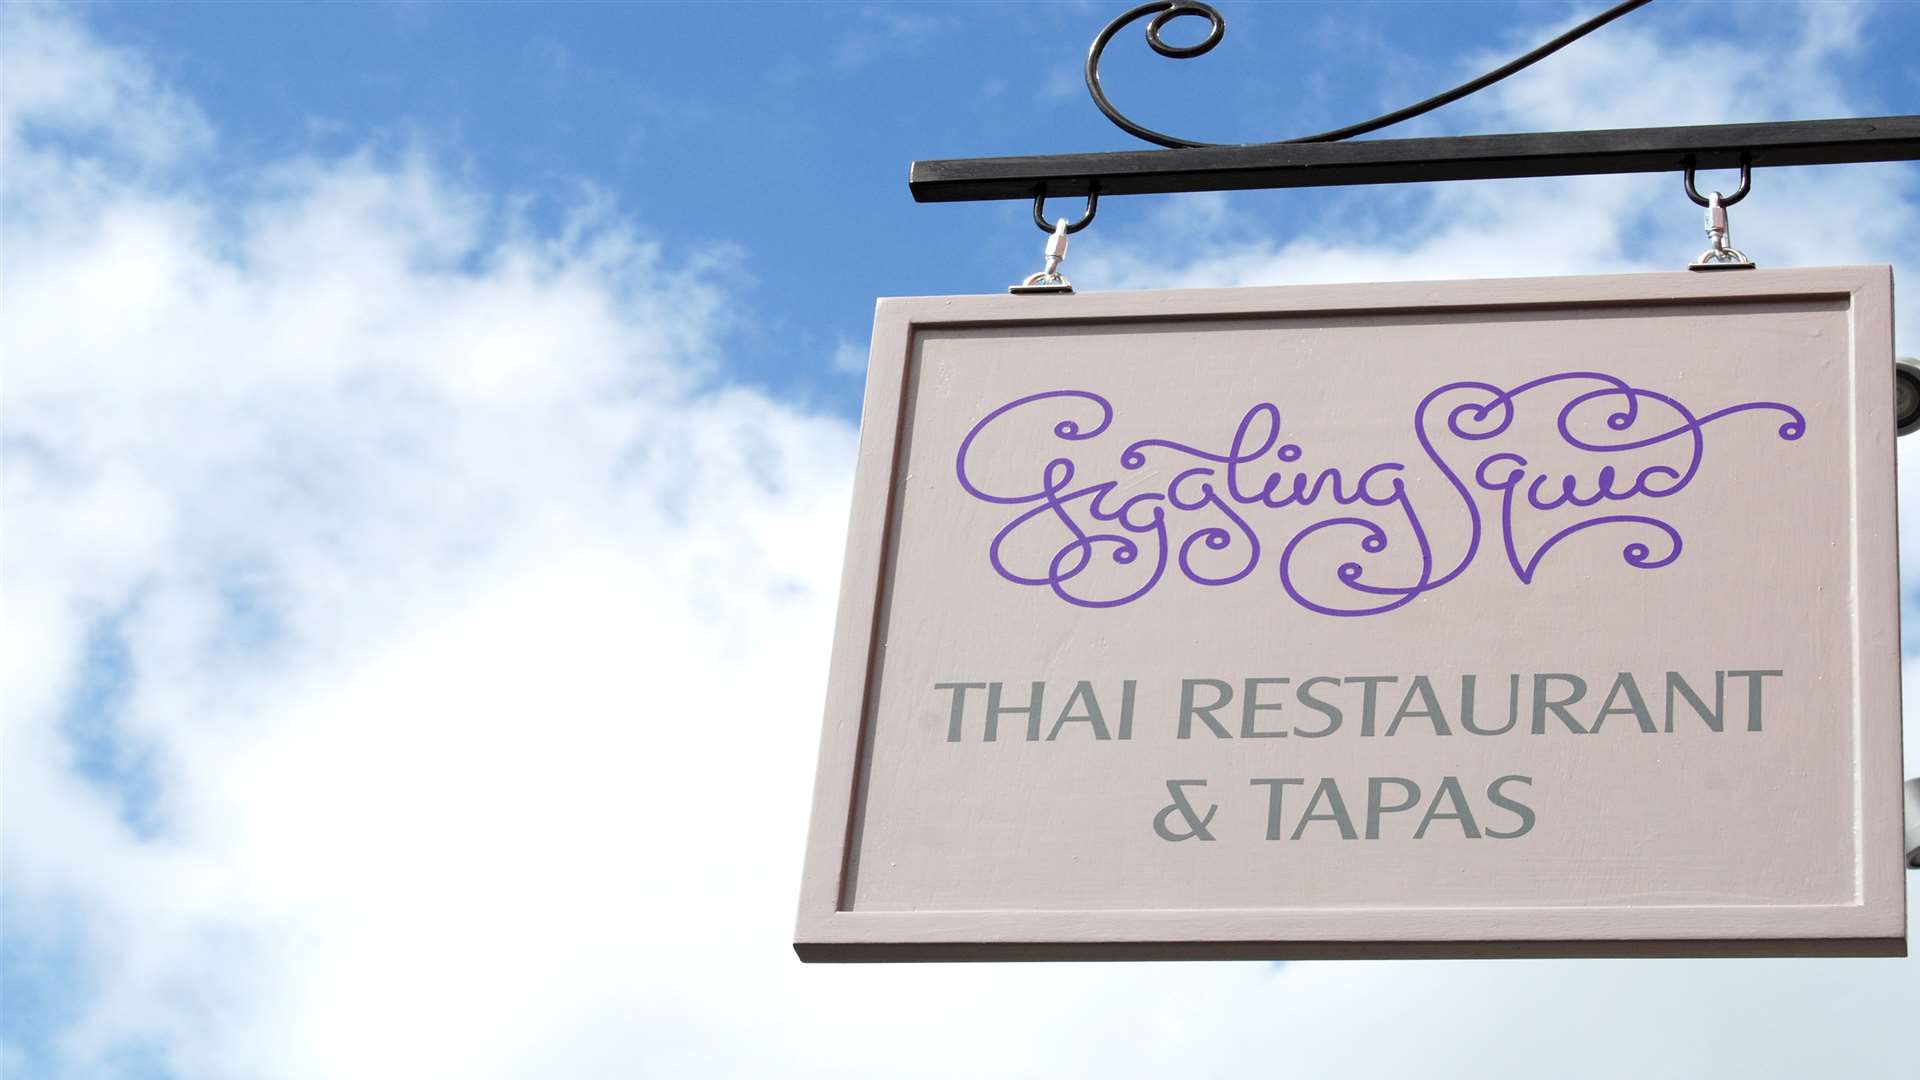 The Giggling Squid restaurant has chains in Sevenoaks and Tunbridge Wells